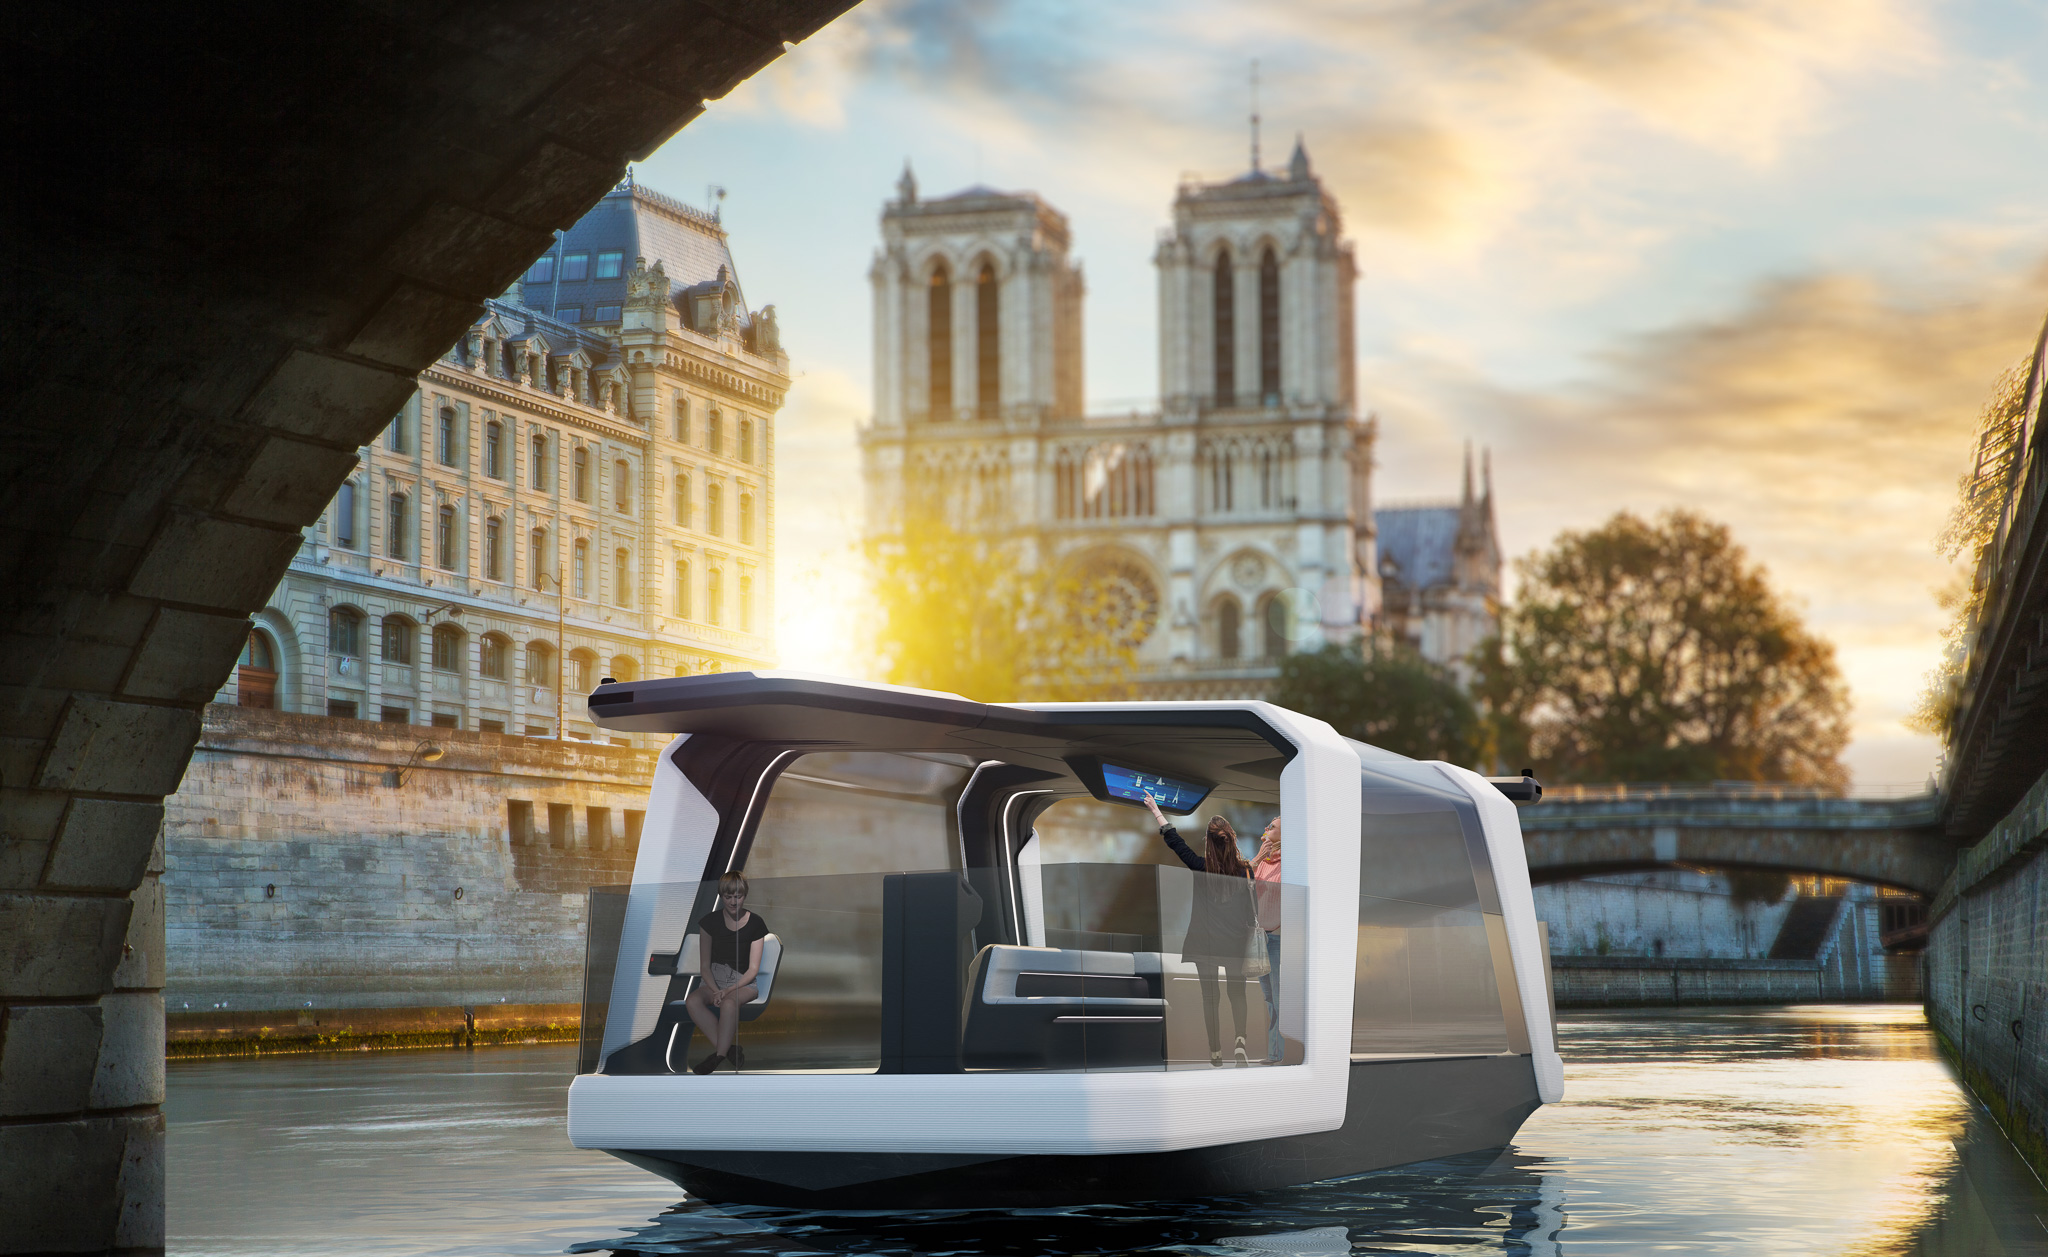 electrical-and-autonomous-ferry-paris-olympic-games-royal-van-der-leun-electrical-installation-autonome-ferry-vdl-seine-seine-olympic-2-